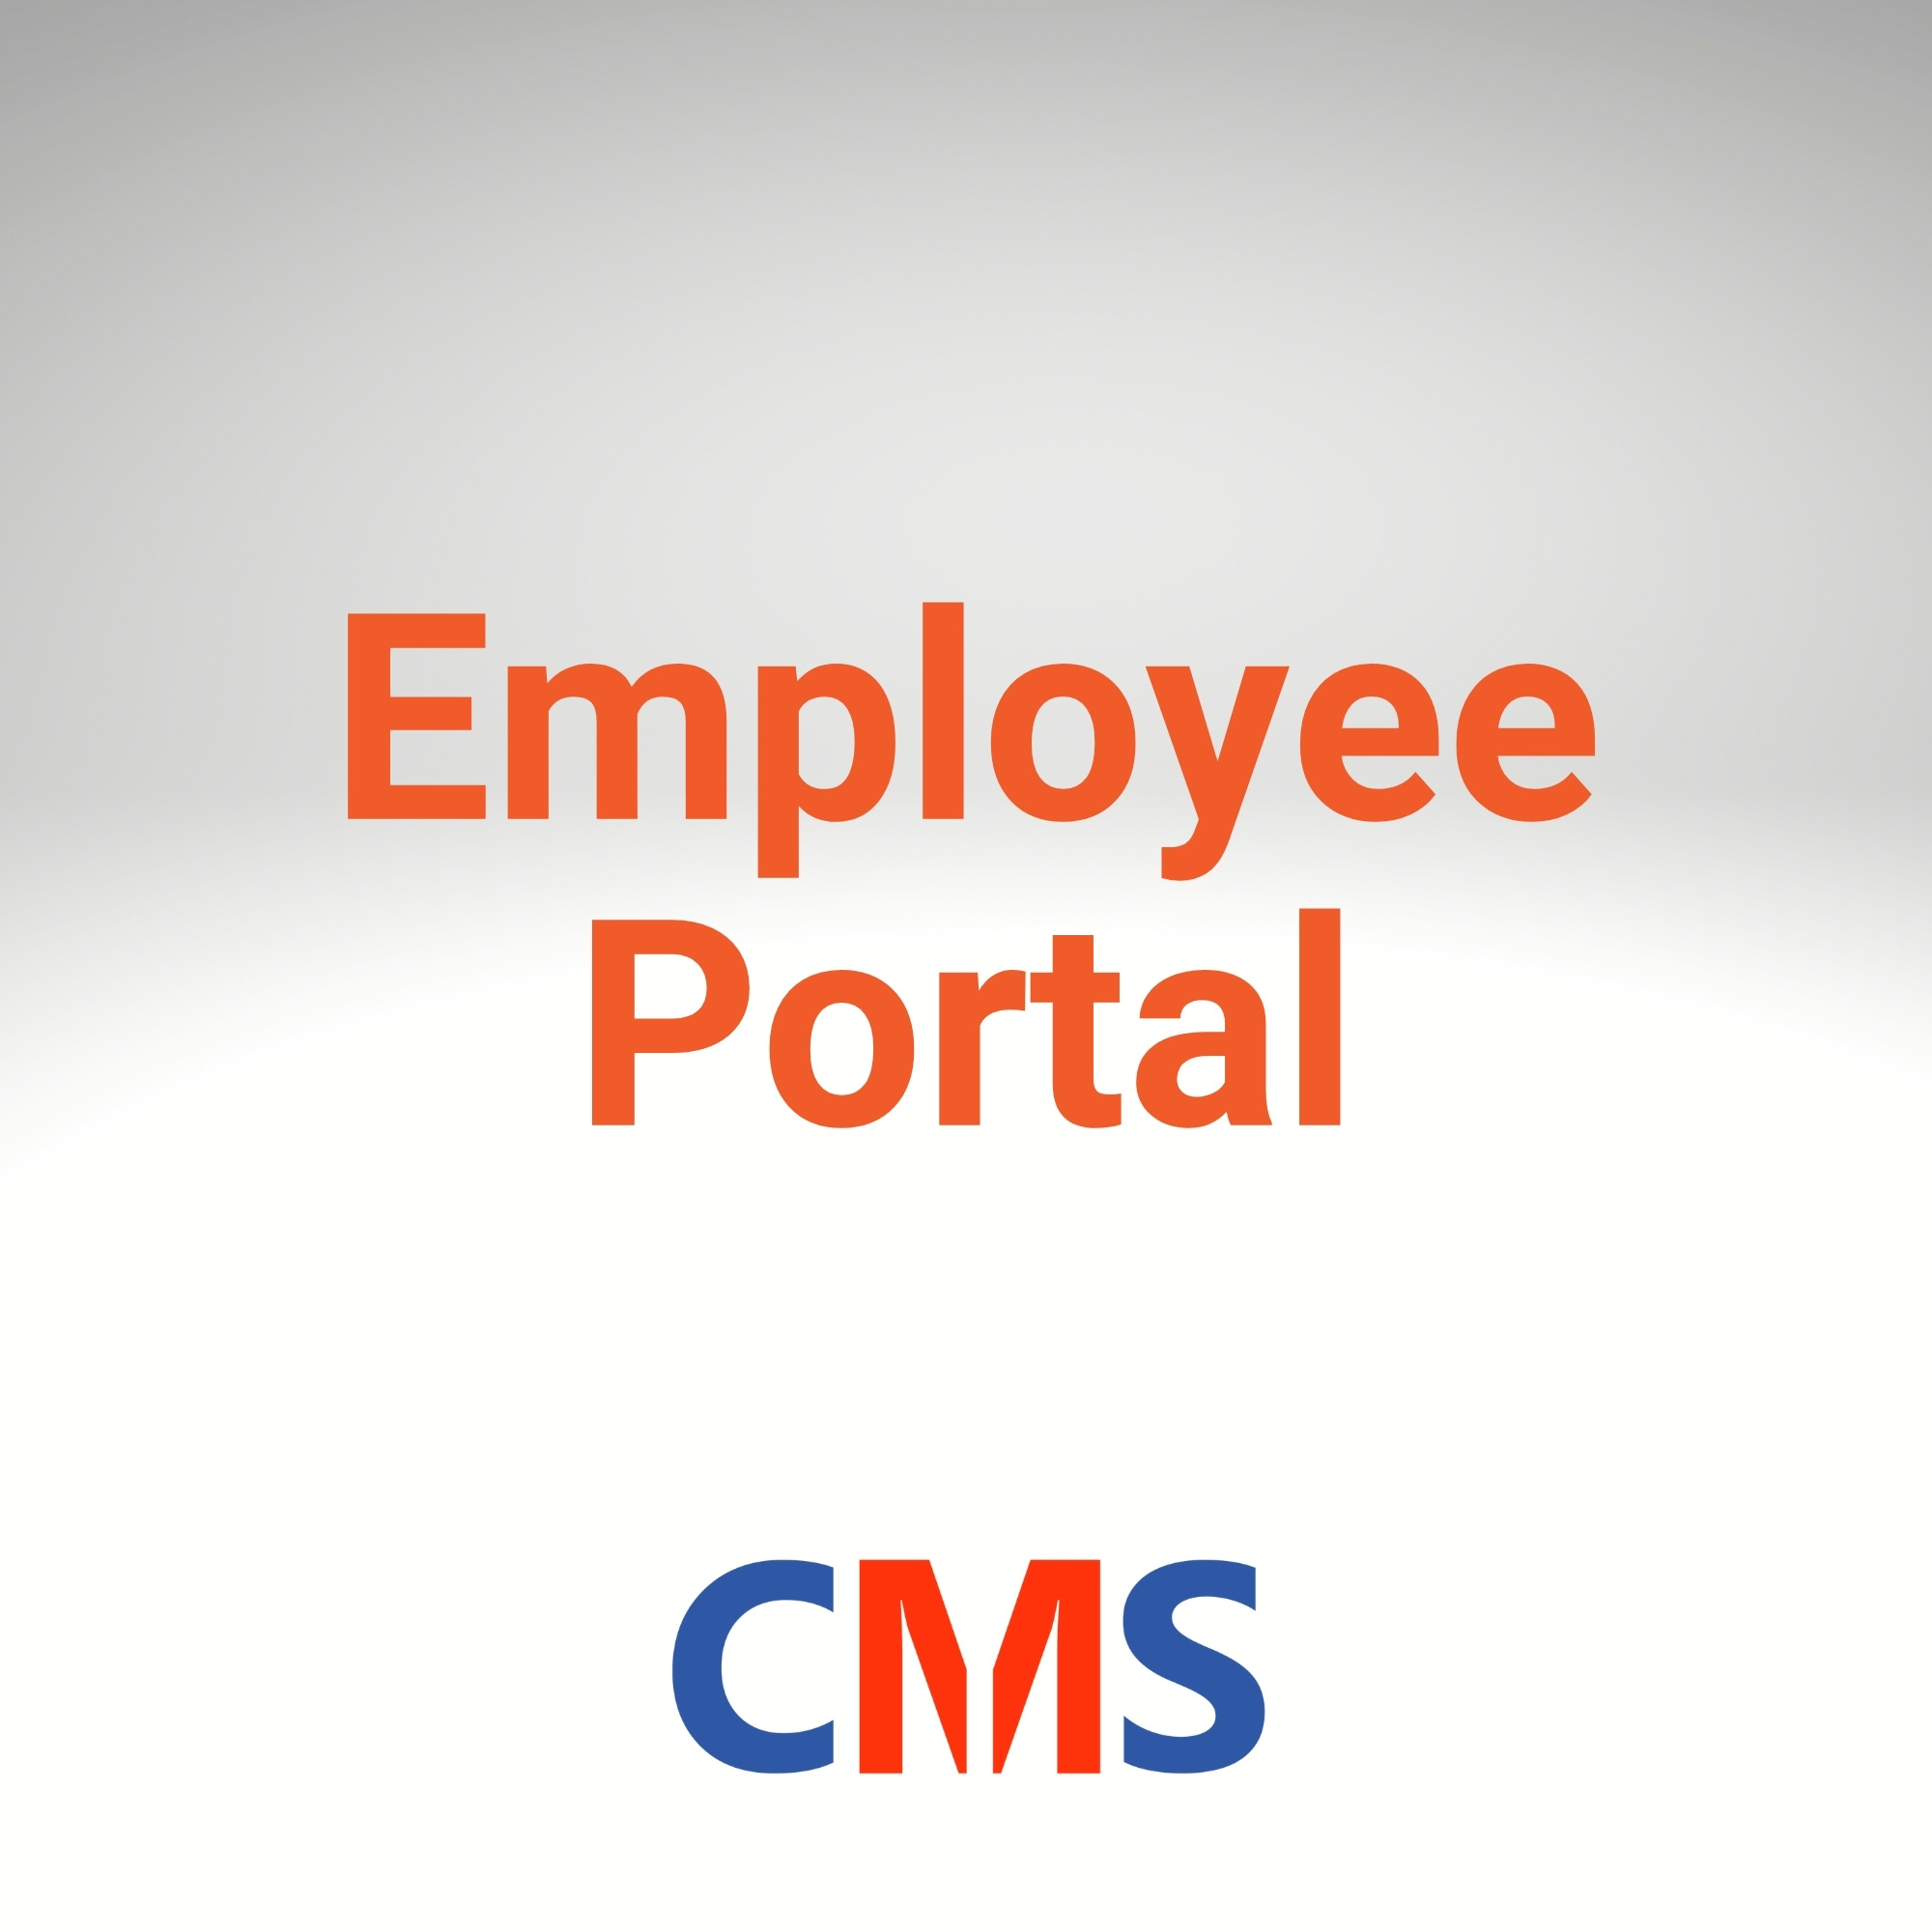 Employee Portal - CMS Corporation